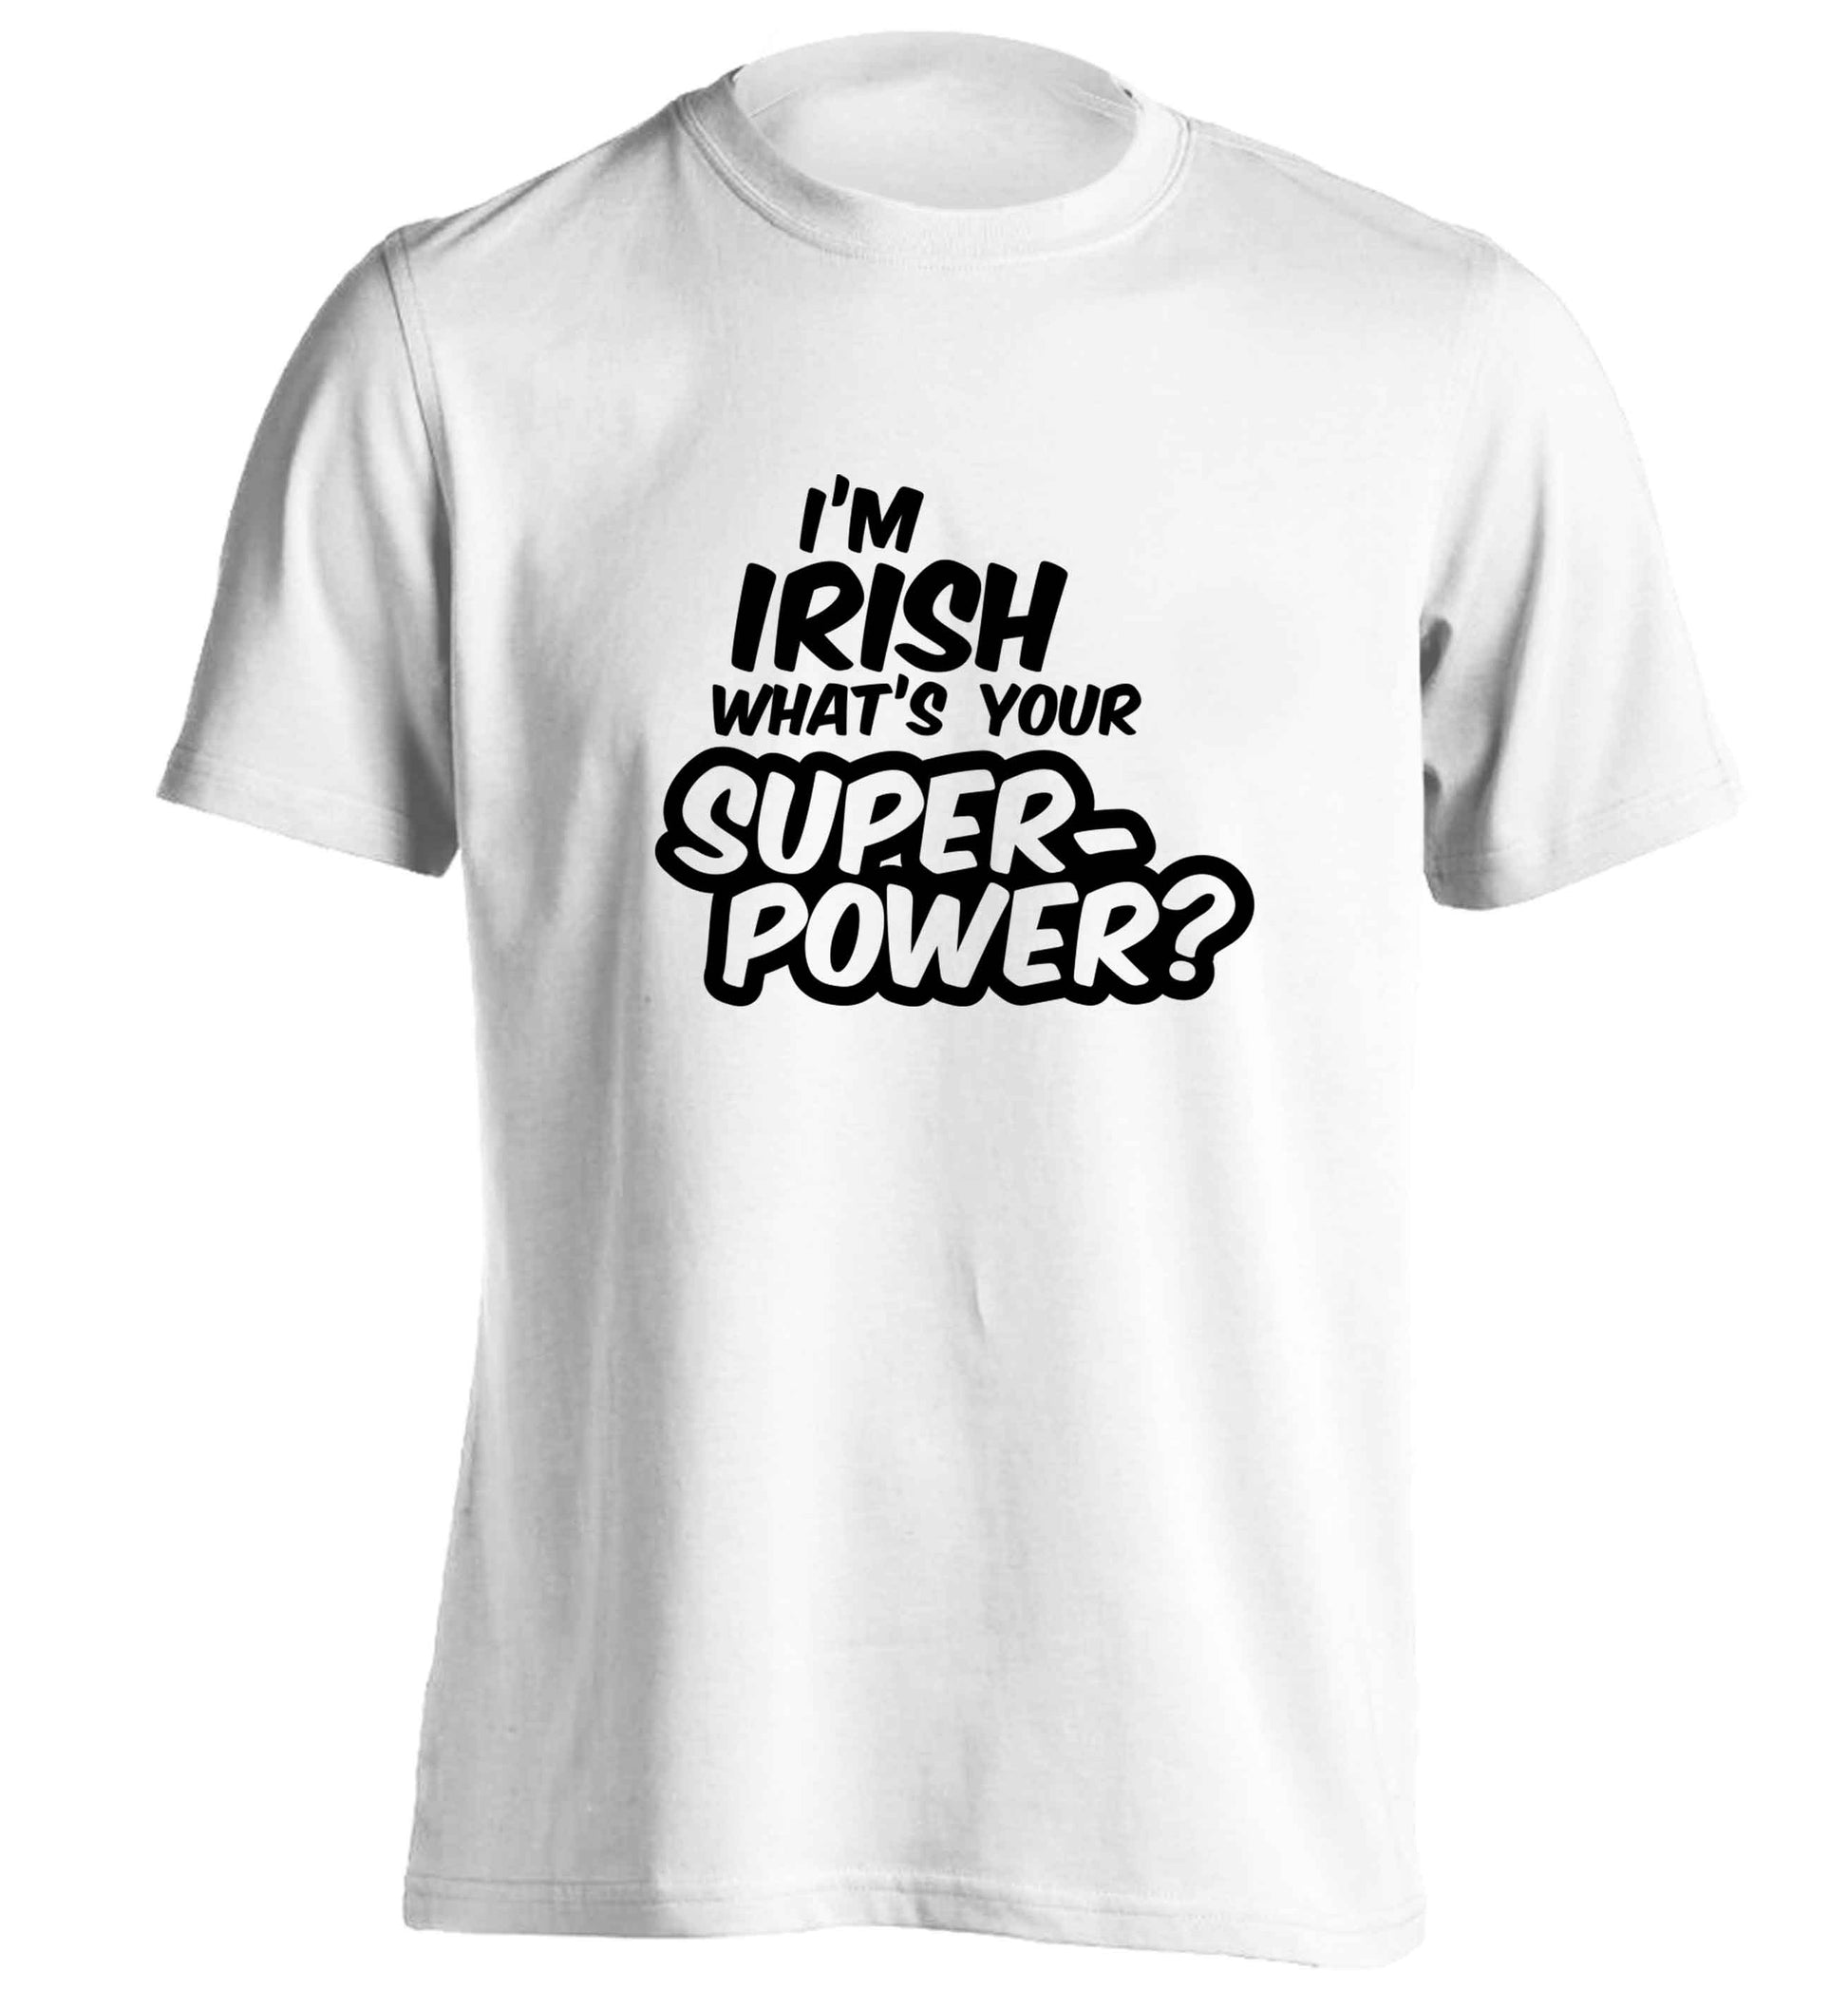 I'm Irish what's your superpower? adults unisex white Tshirt 2XL